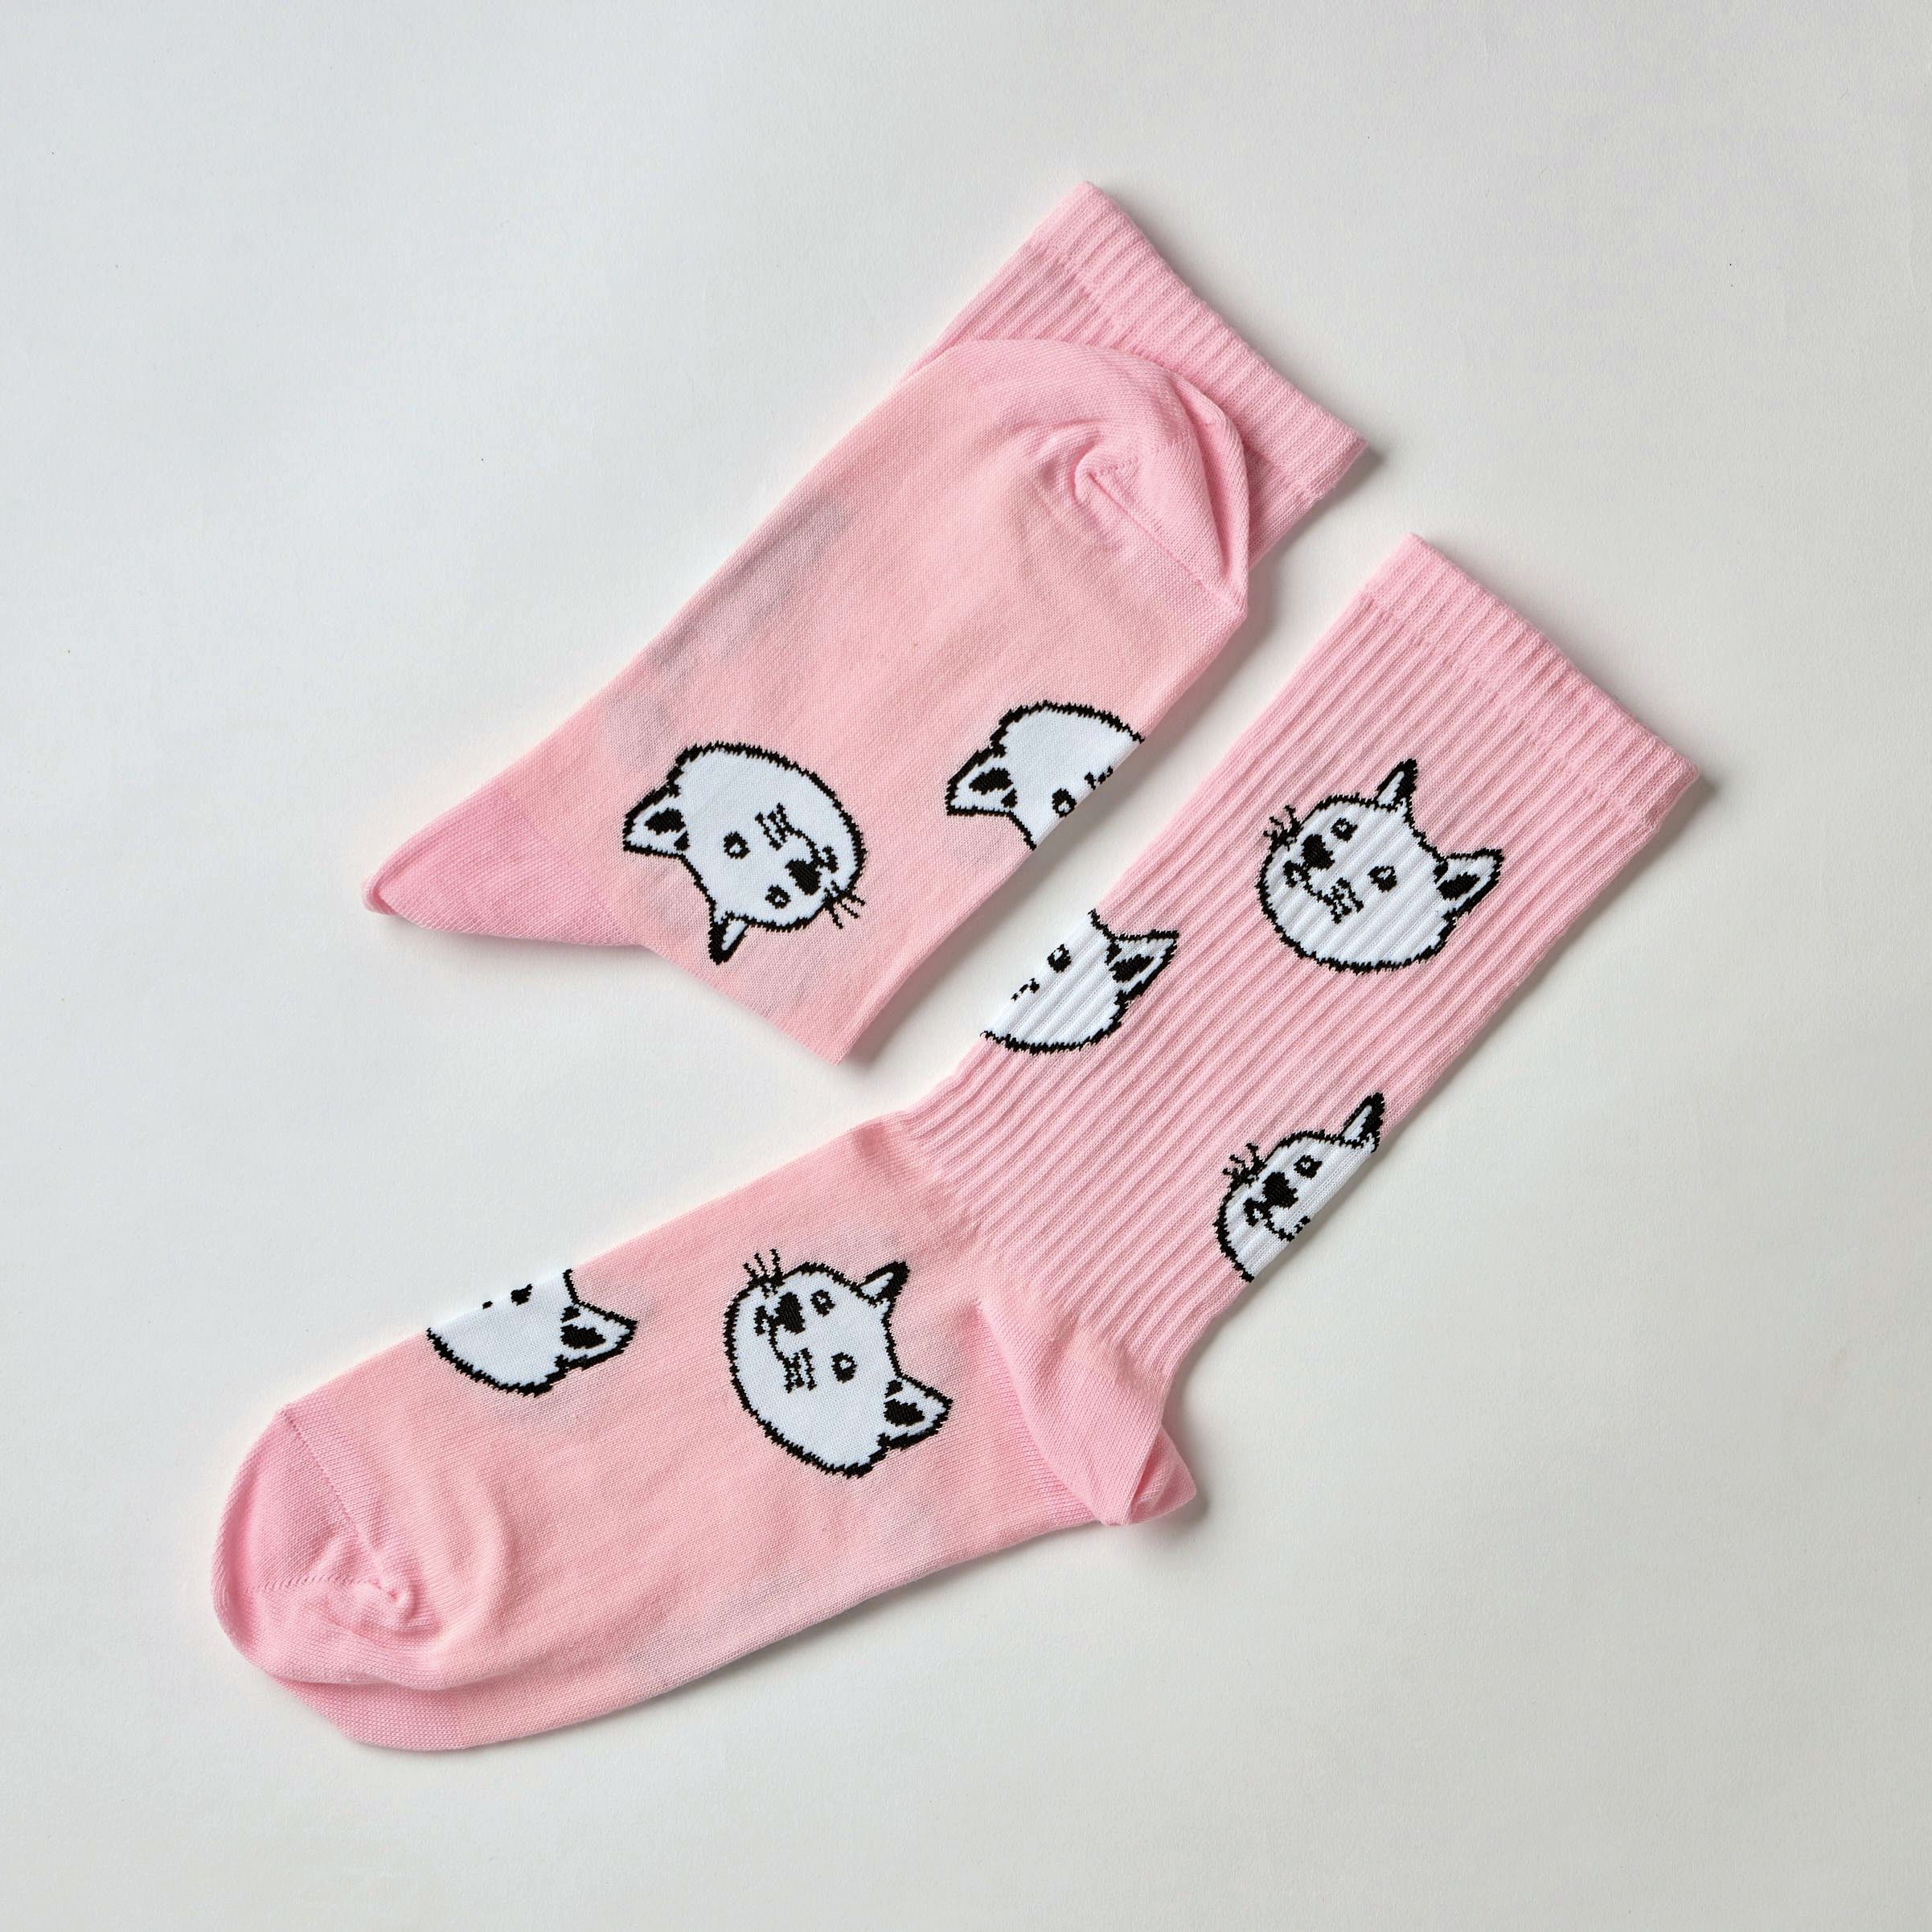 Носки женские St. Friday Socks 695-13 розовые 34-37